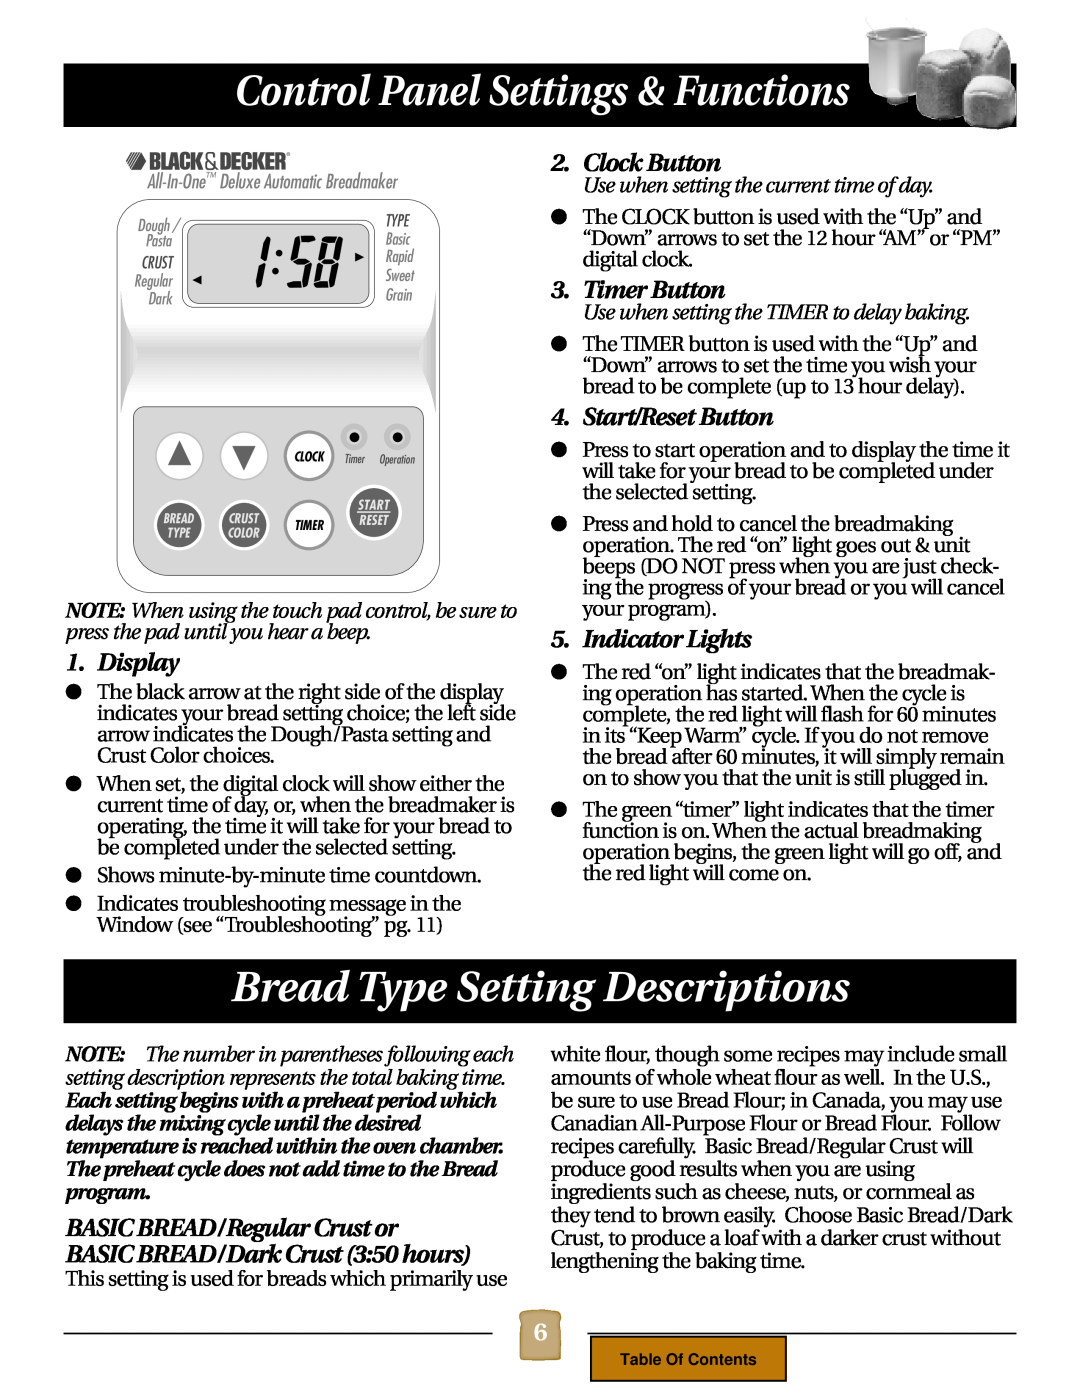 Black & Decker B1620 Control Panel Settings & Functions, Bread Type Setting Descriptions, Display, Clock Button 